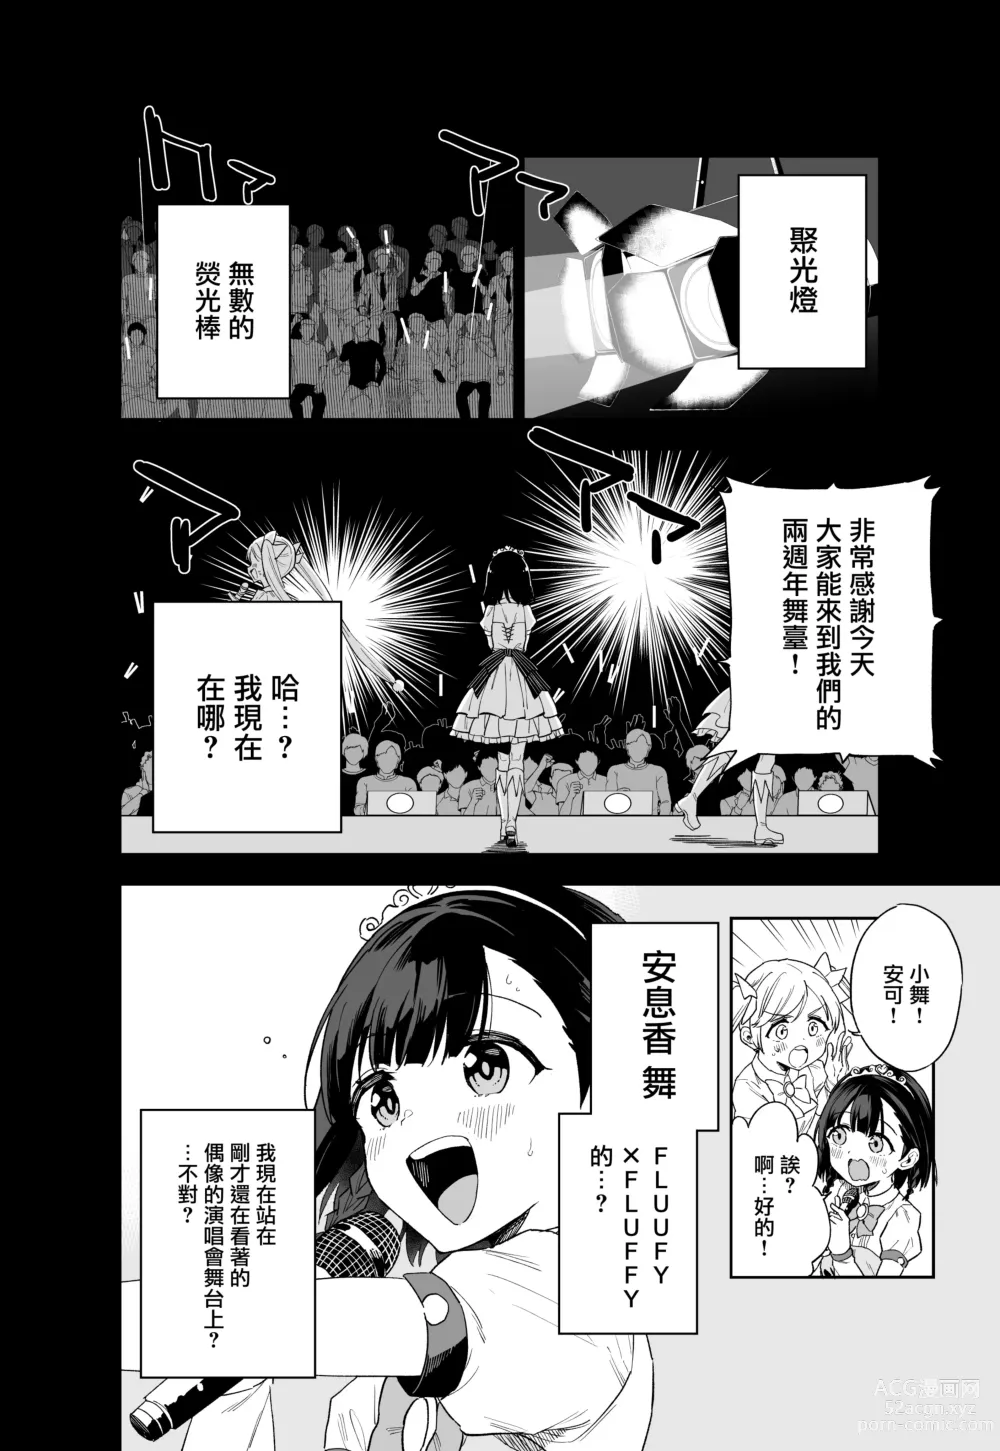 Page 5 of doujinshi 性转成为○学女生偶像之后和所有队员百合贴贴